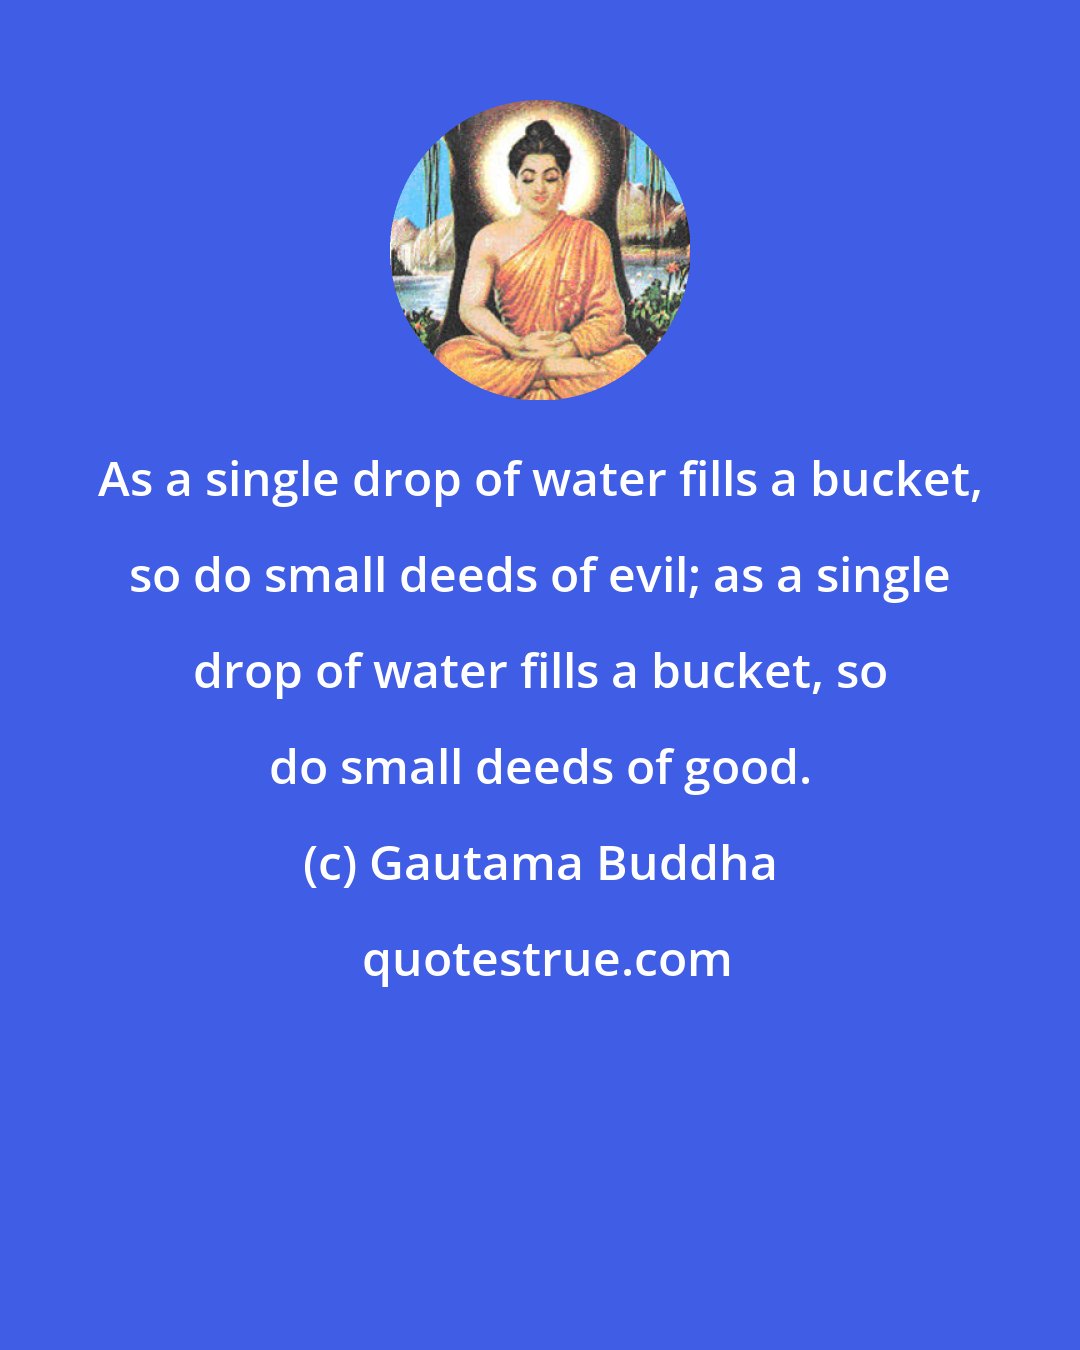 Gautama Buddha: As a single drop of water fills a bucket, so do small deeds of evil; as a single drop of water fills a bucket, so do small deeds of good.